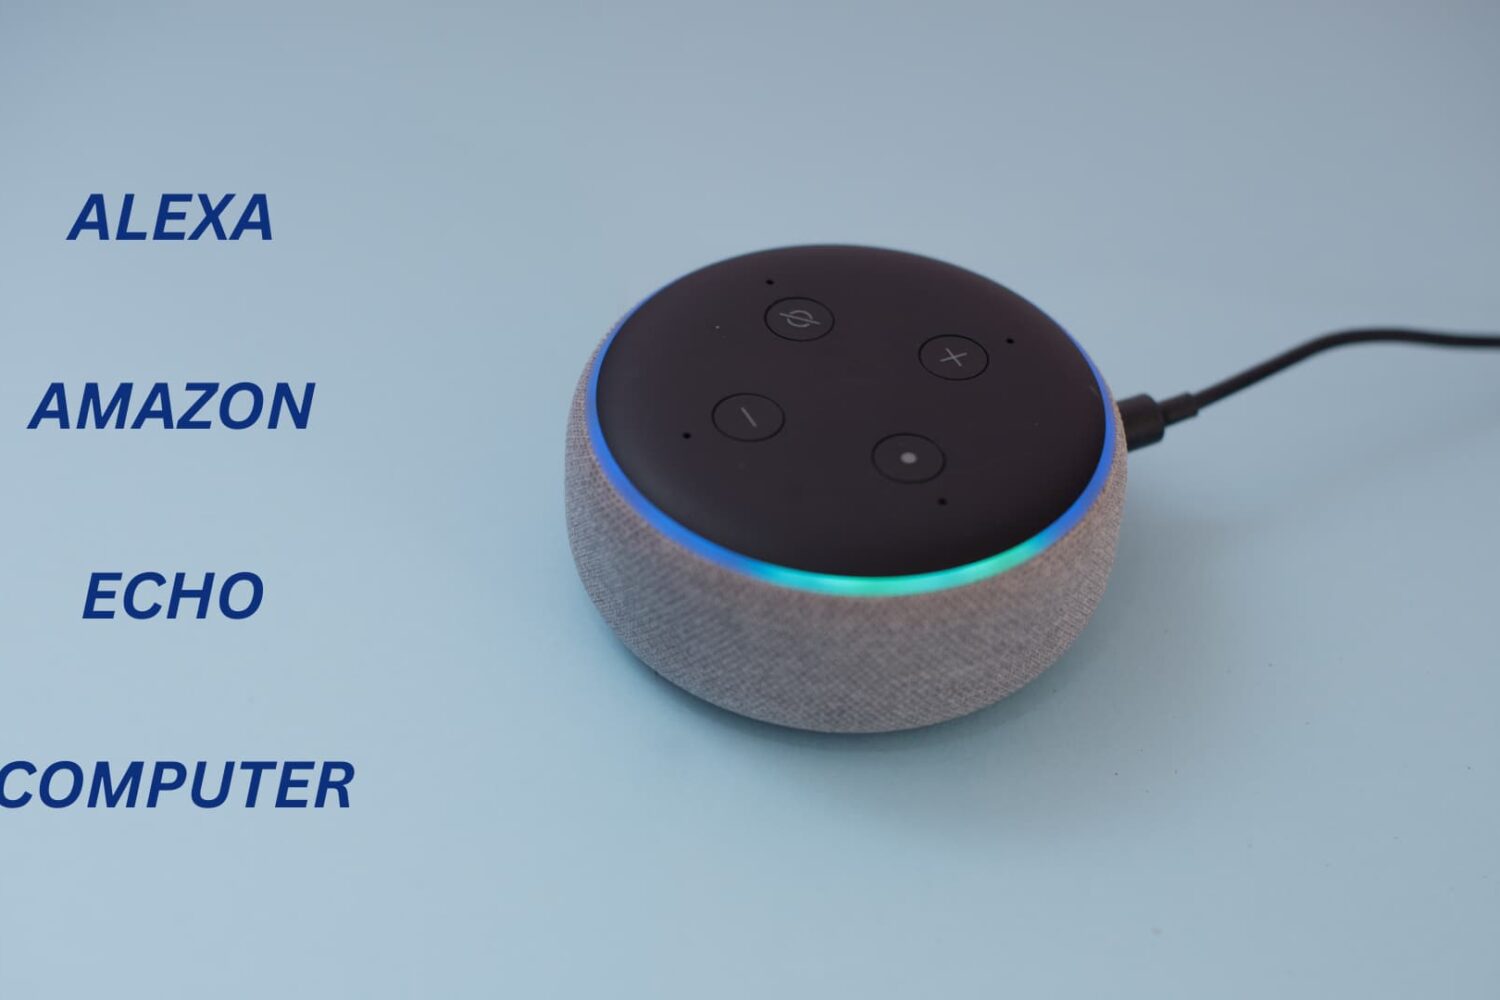 Wake Words for Alexa on Amazon Echo speaker